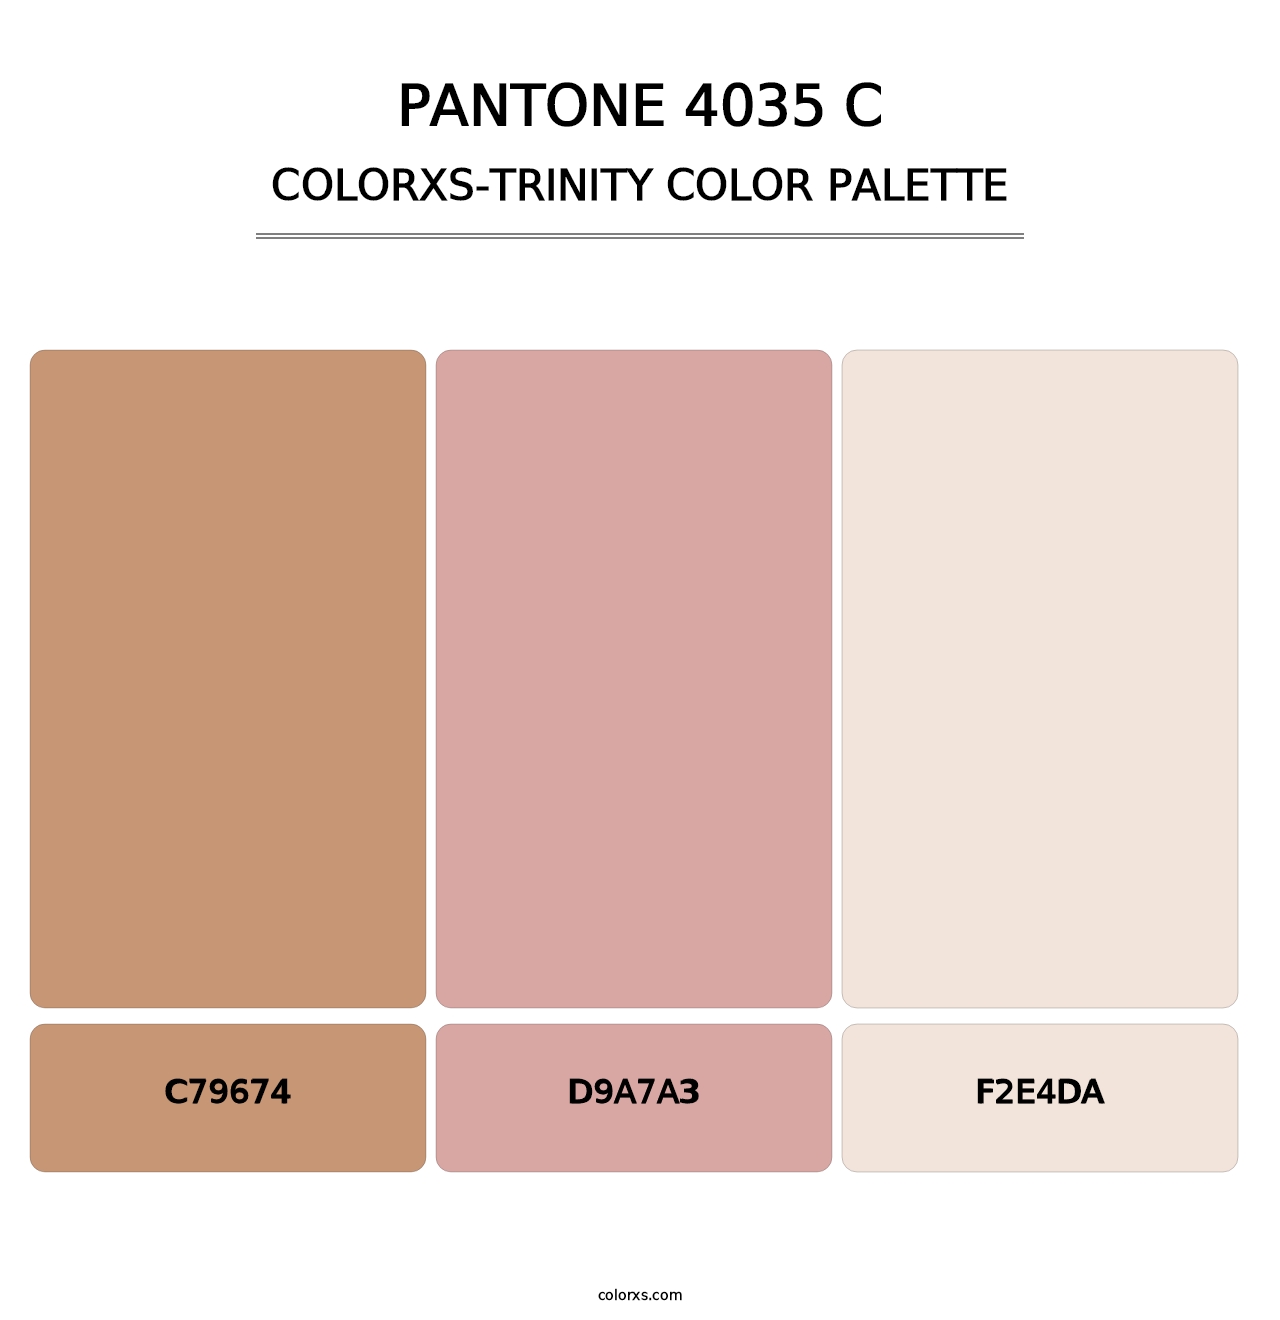 PANTONE 4035 C - Colorxs Trinity Palette